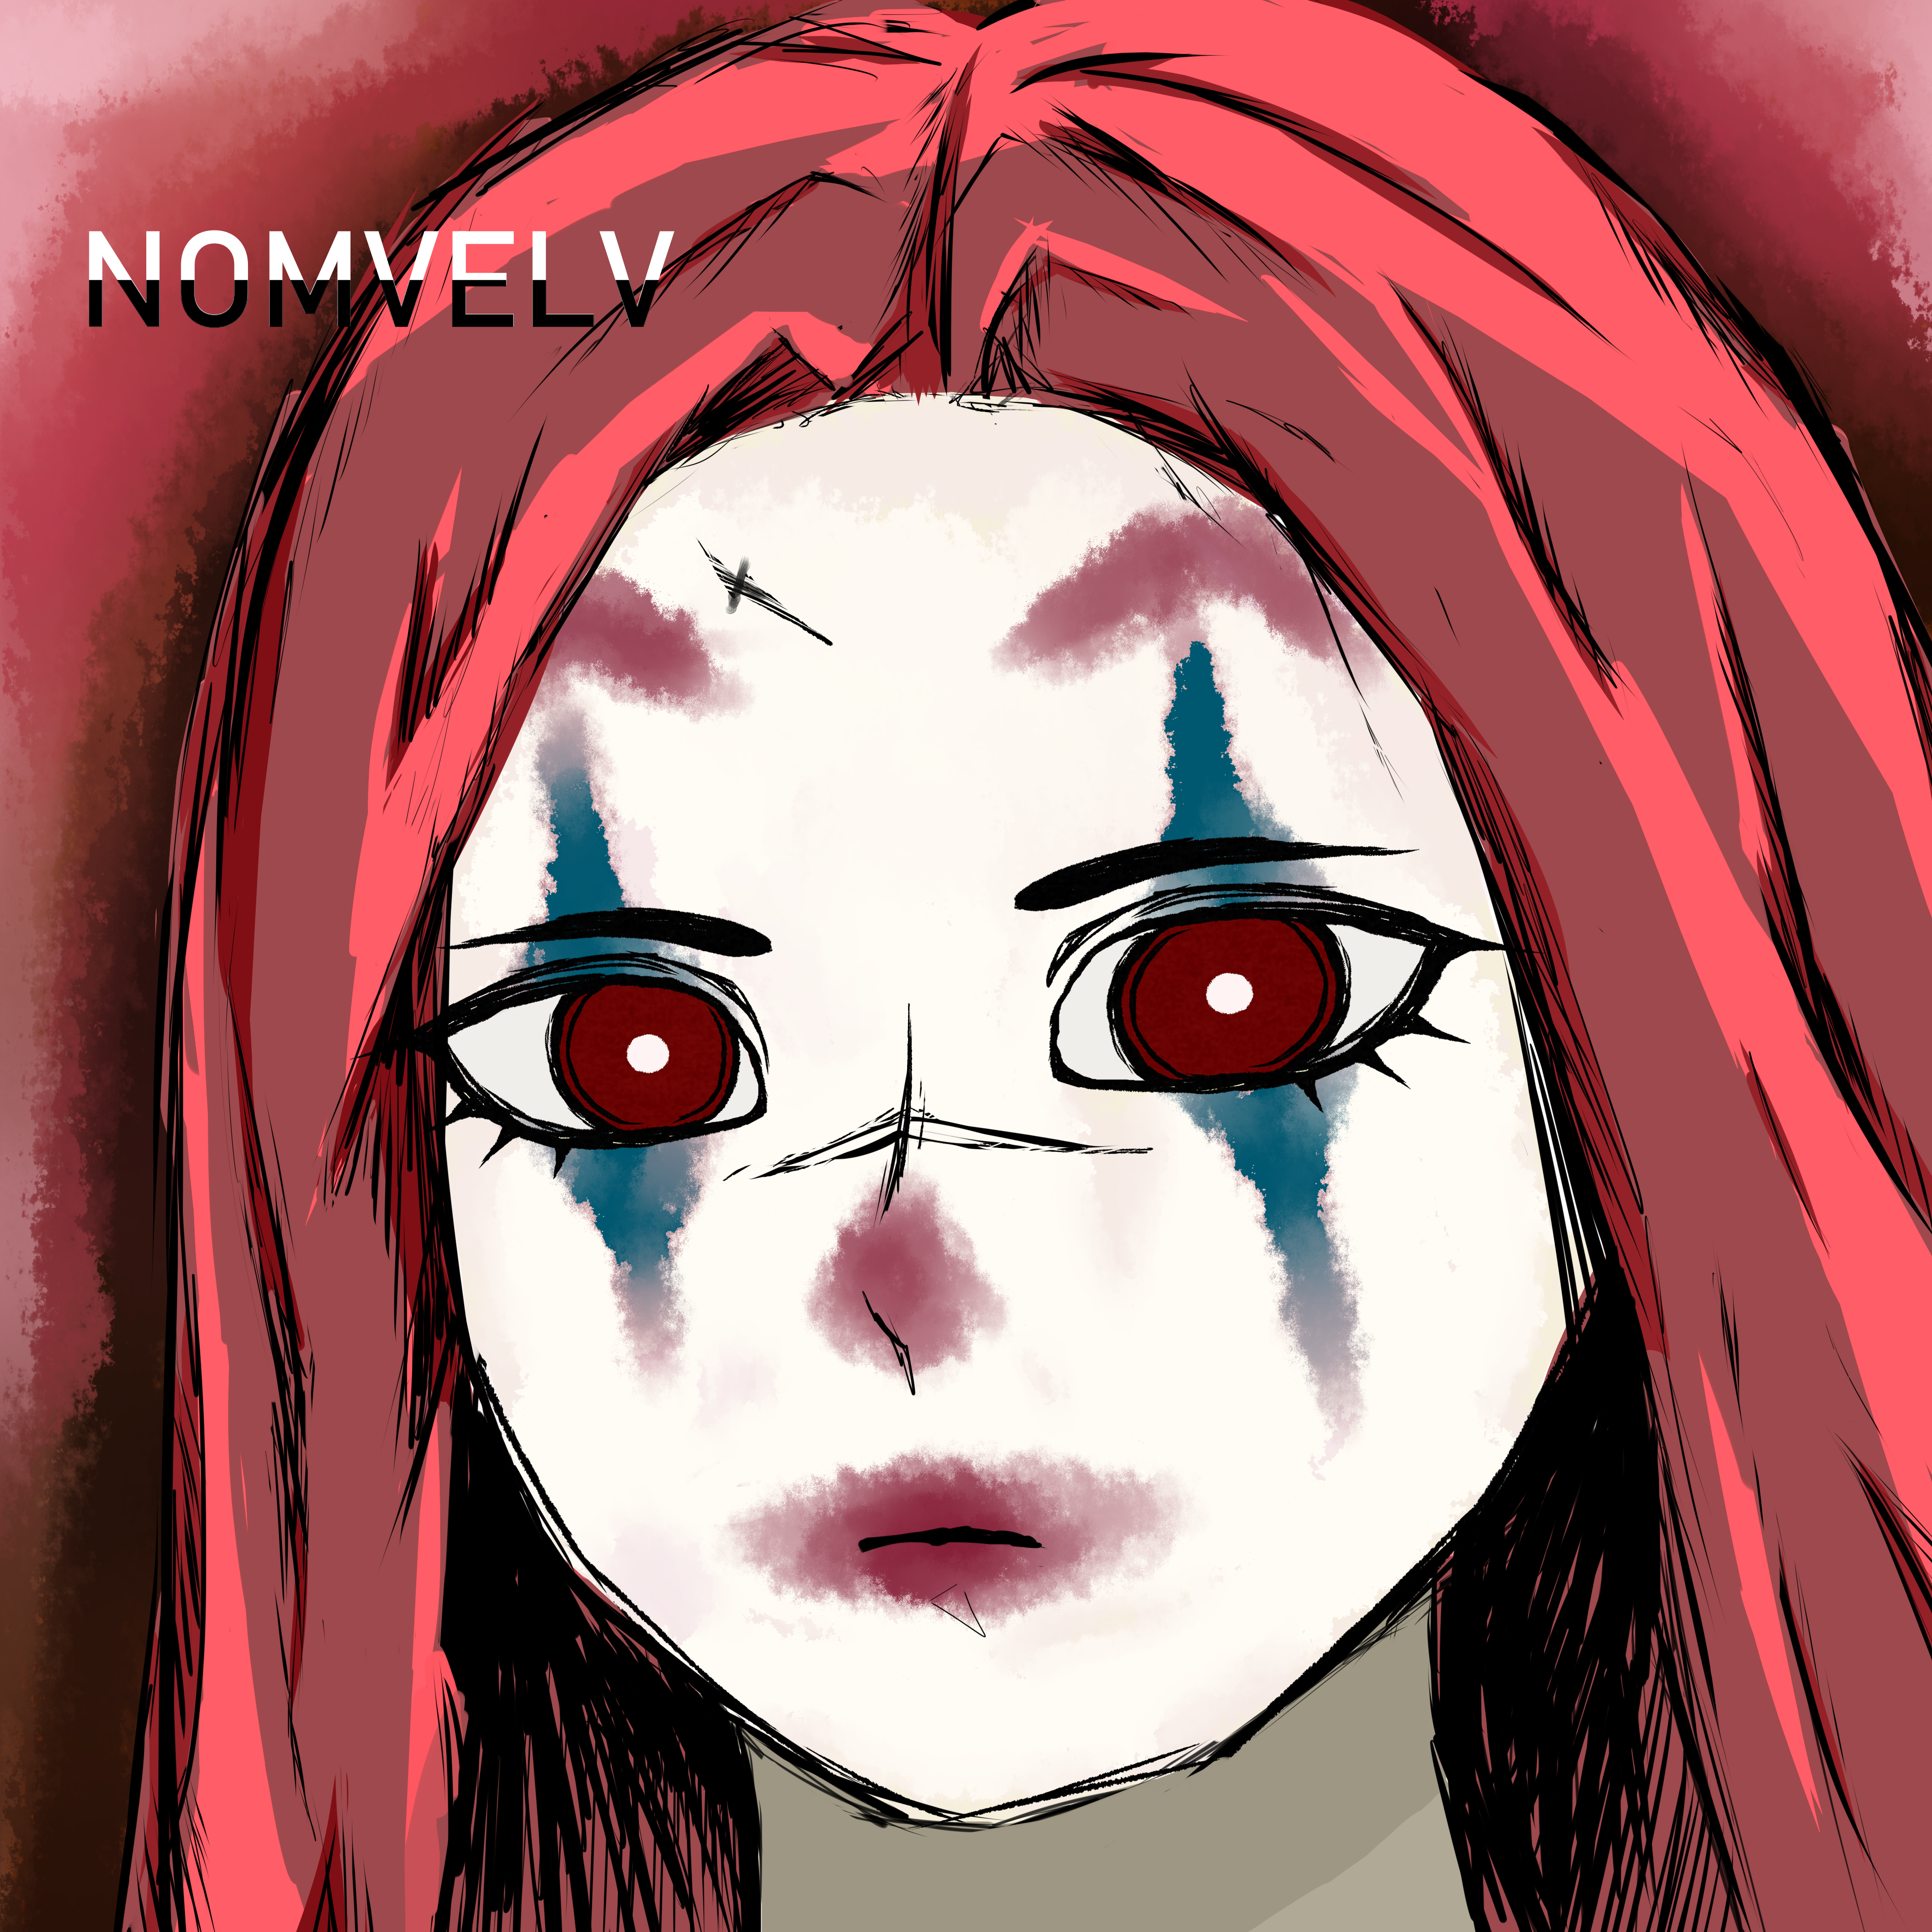 General 4200x4200 clown digital art red nose makeup redhead amateur closeup watermarked Nomvelv looking at viewer